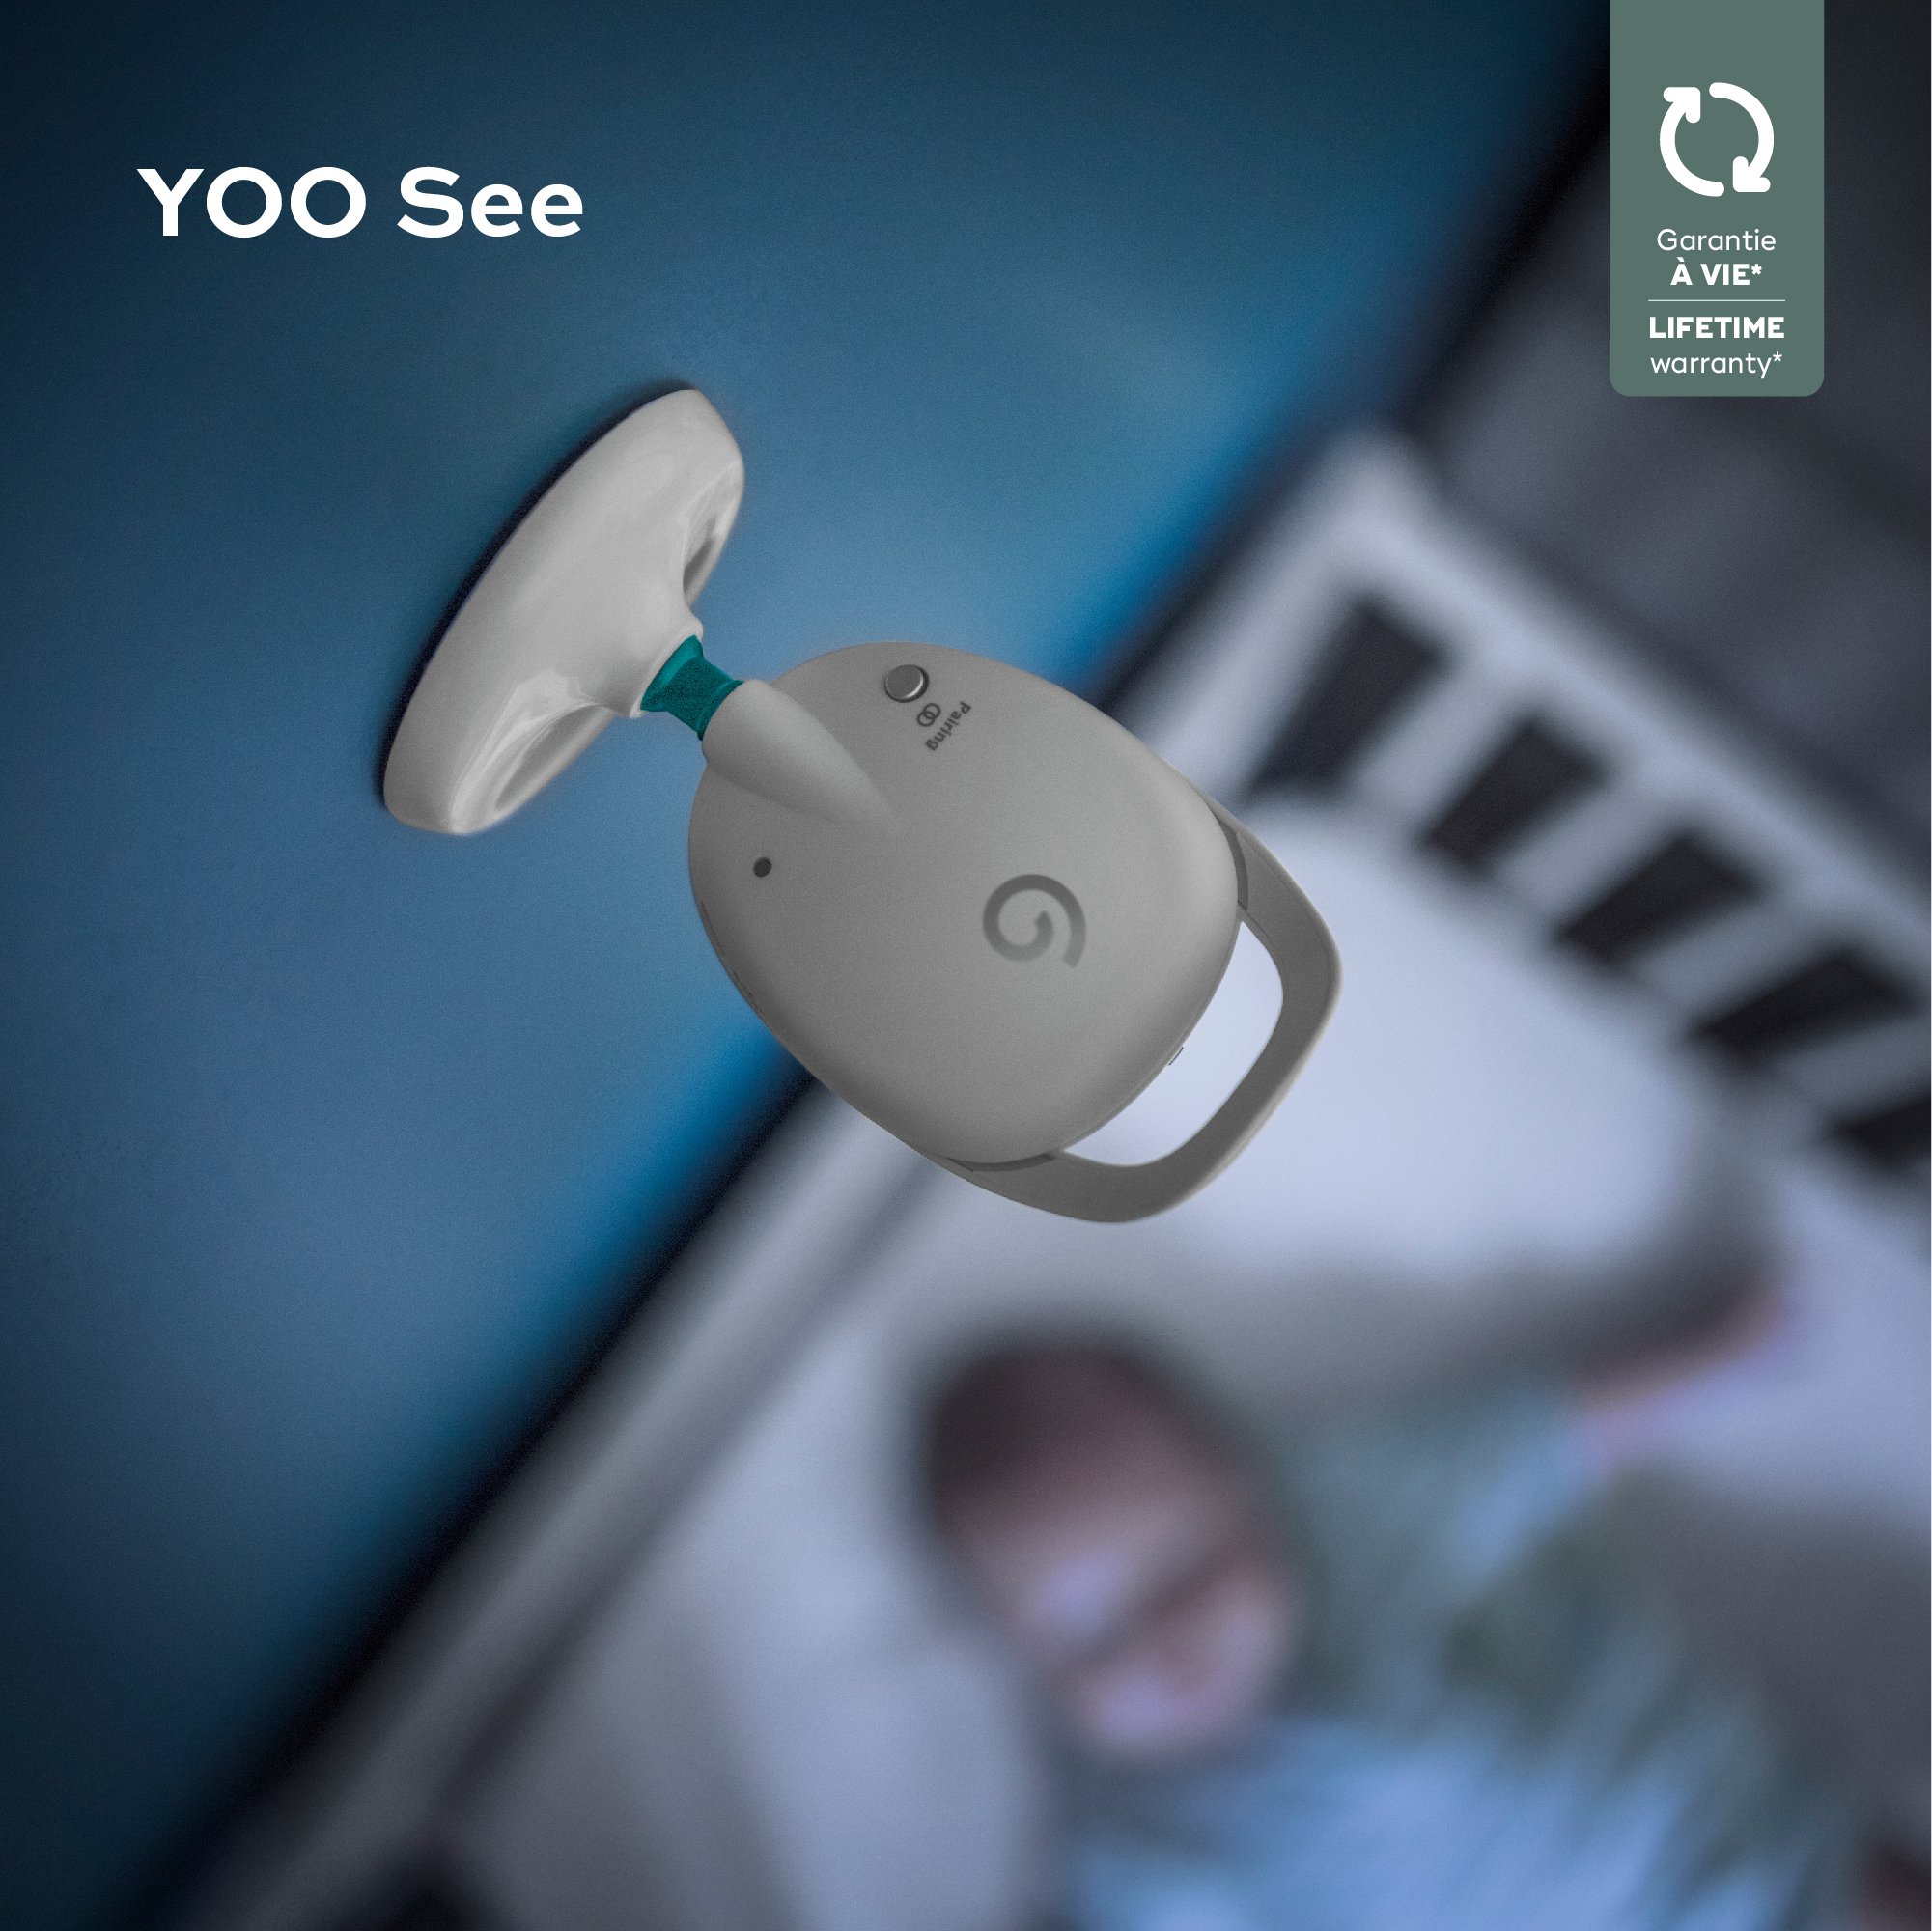 Babymoov - Babyphone - Caméra additionnelle pour visio care